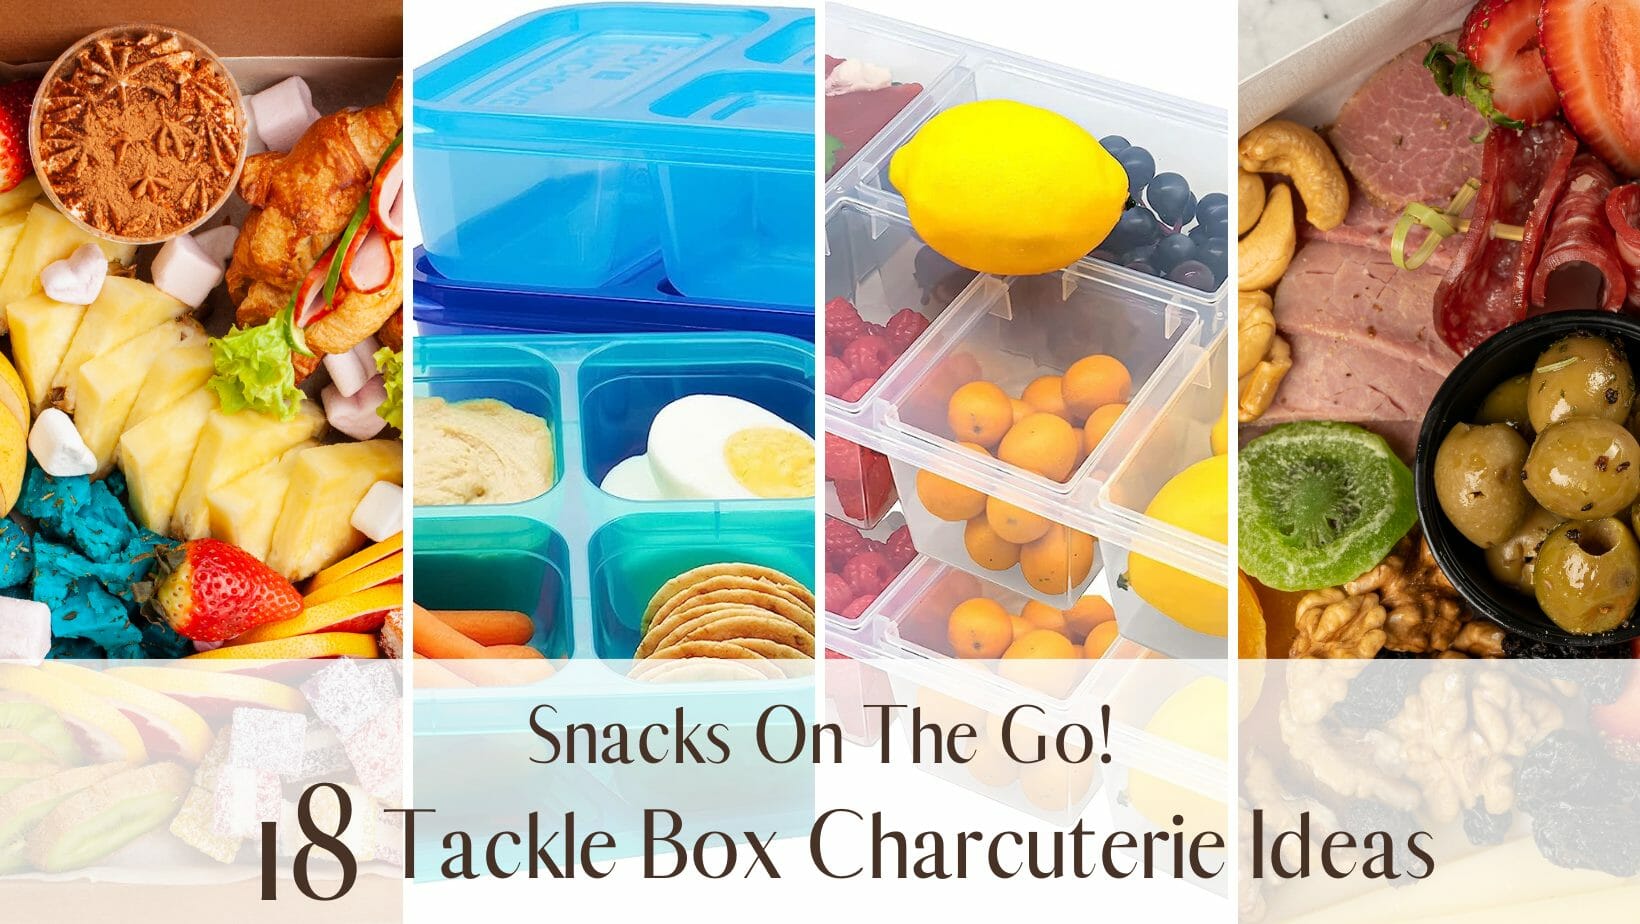 Snacks On The Go! 18 Tackle Box Charcuterie Ideas - ICA